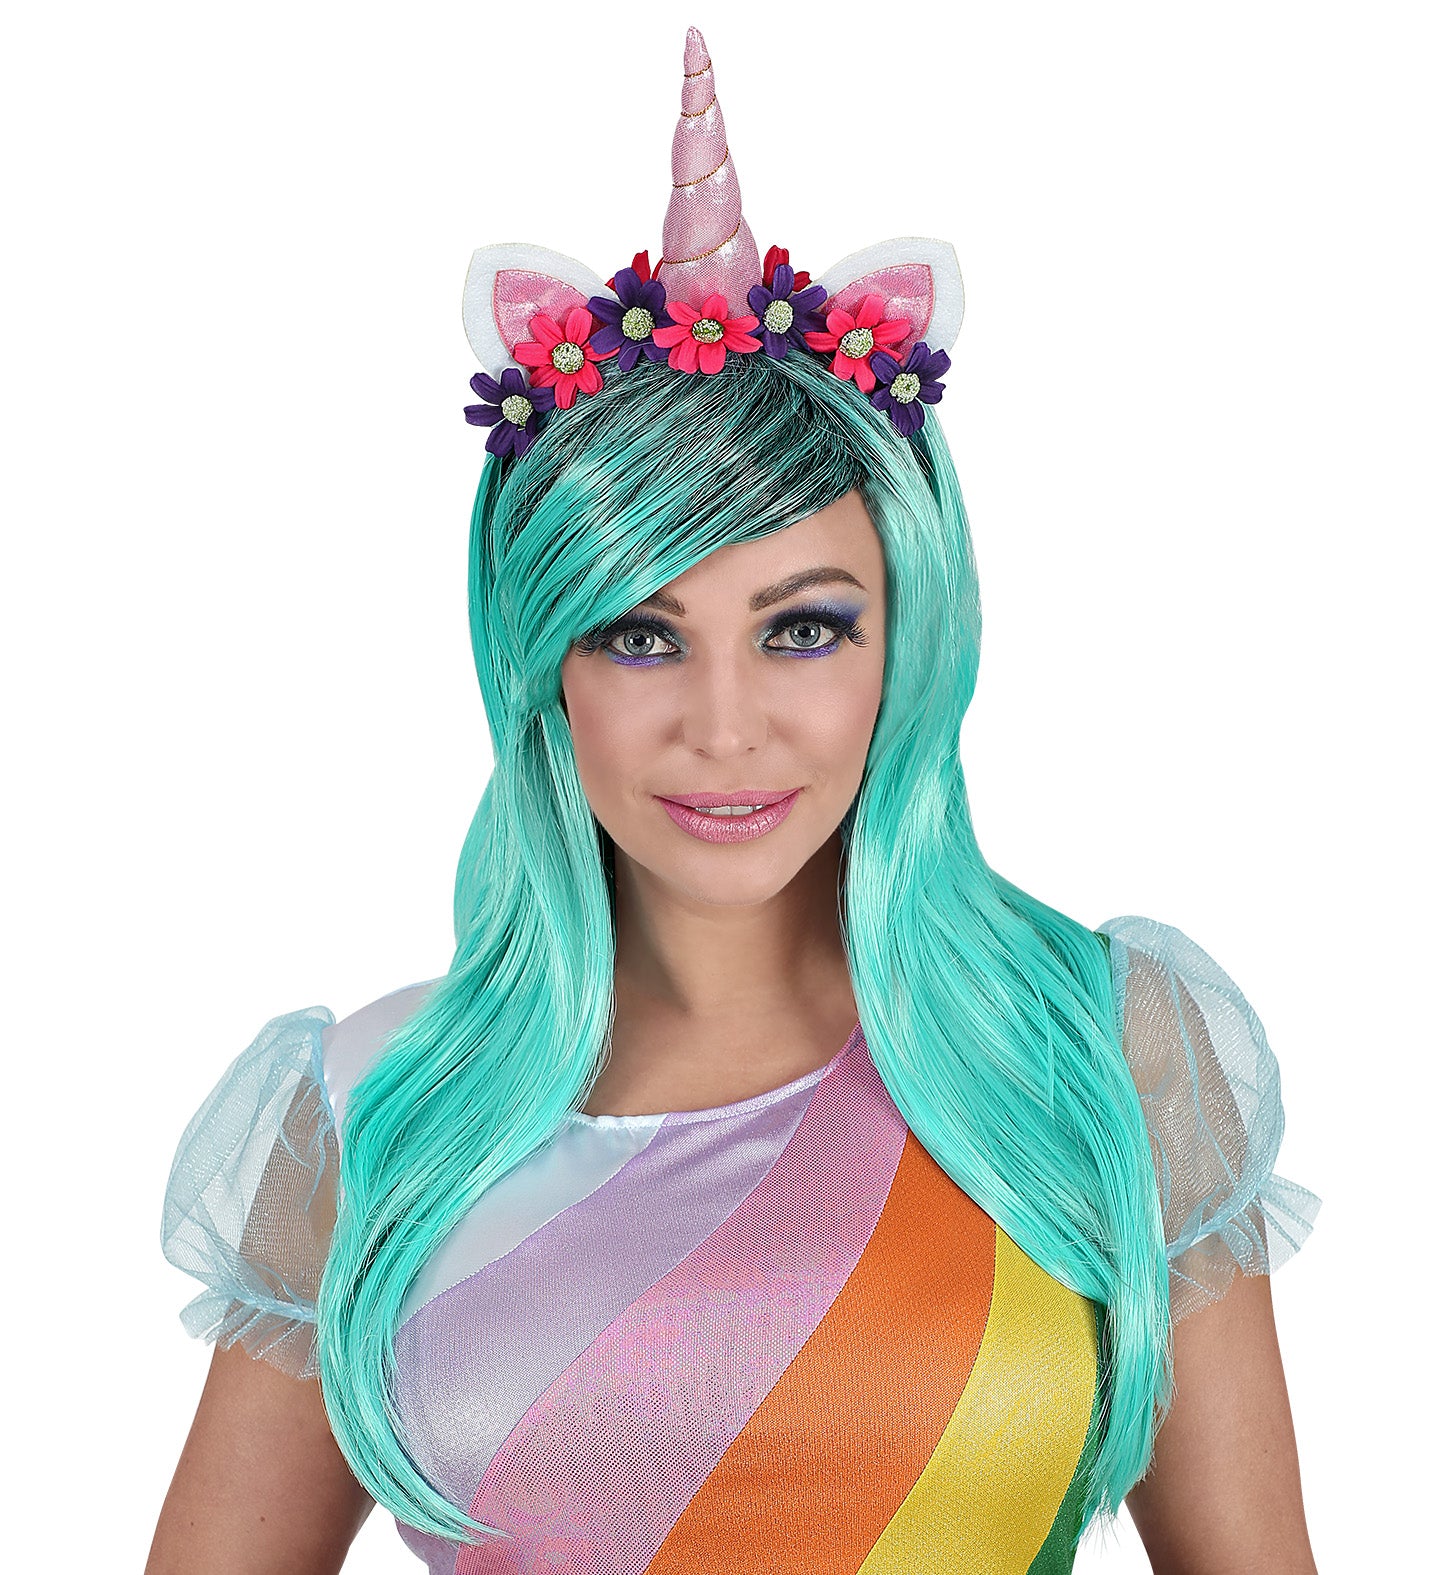 Fantasy Unicorn Wig and Flower Headpiece